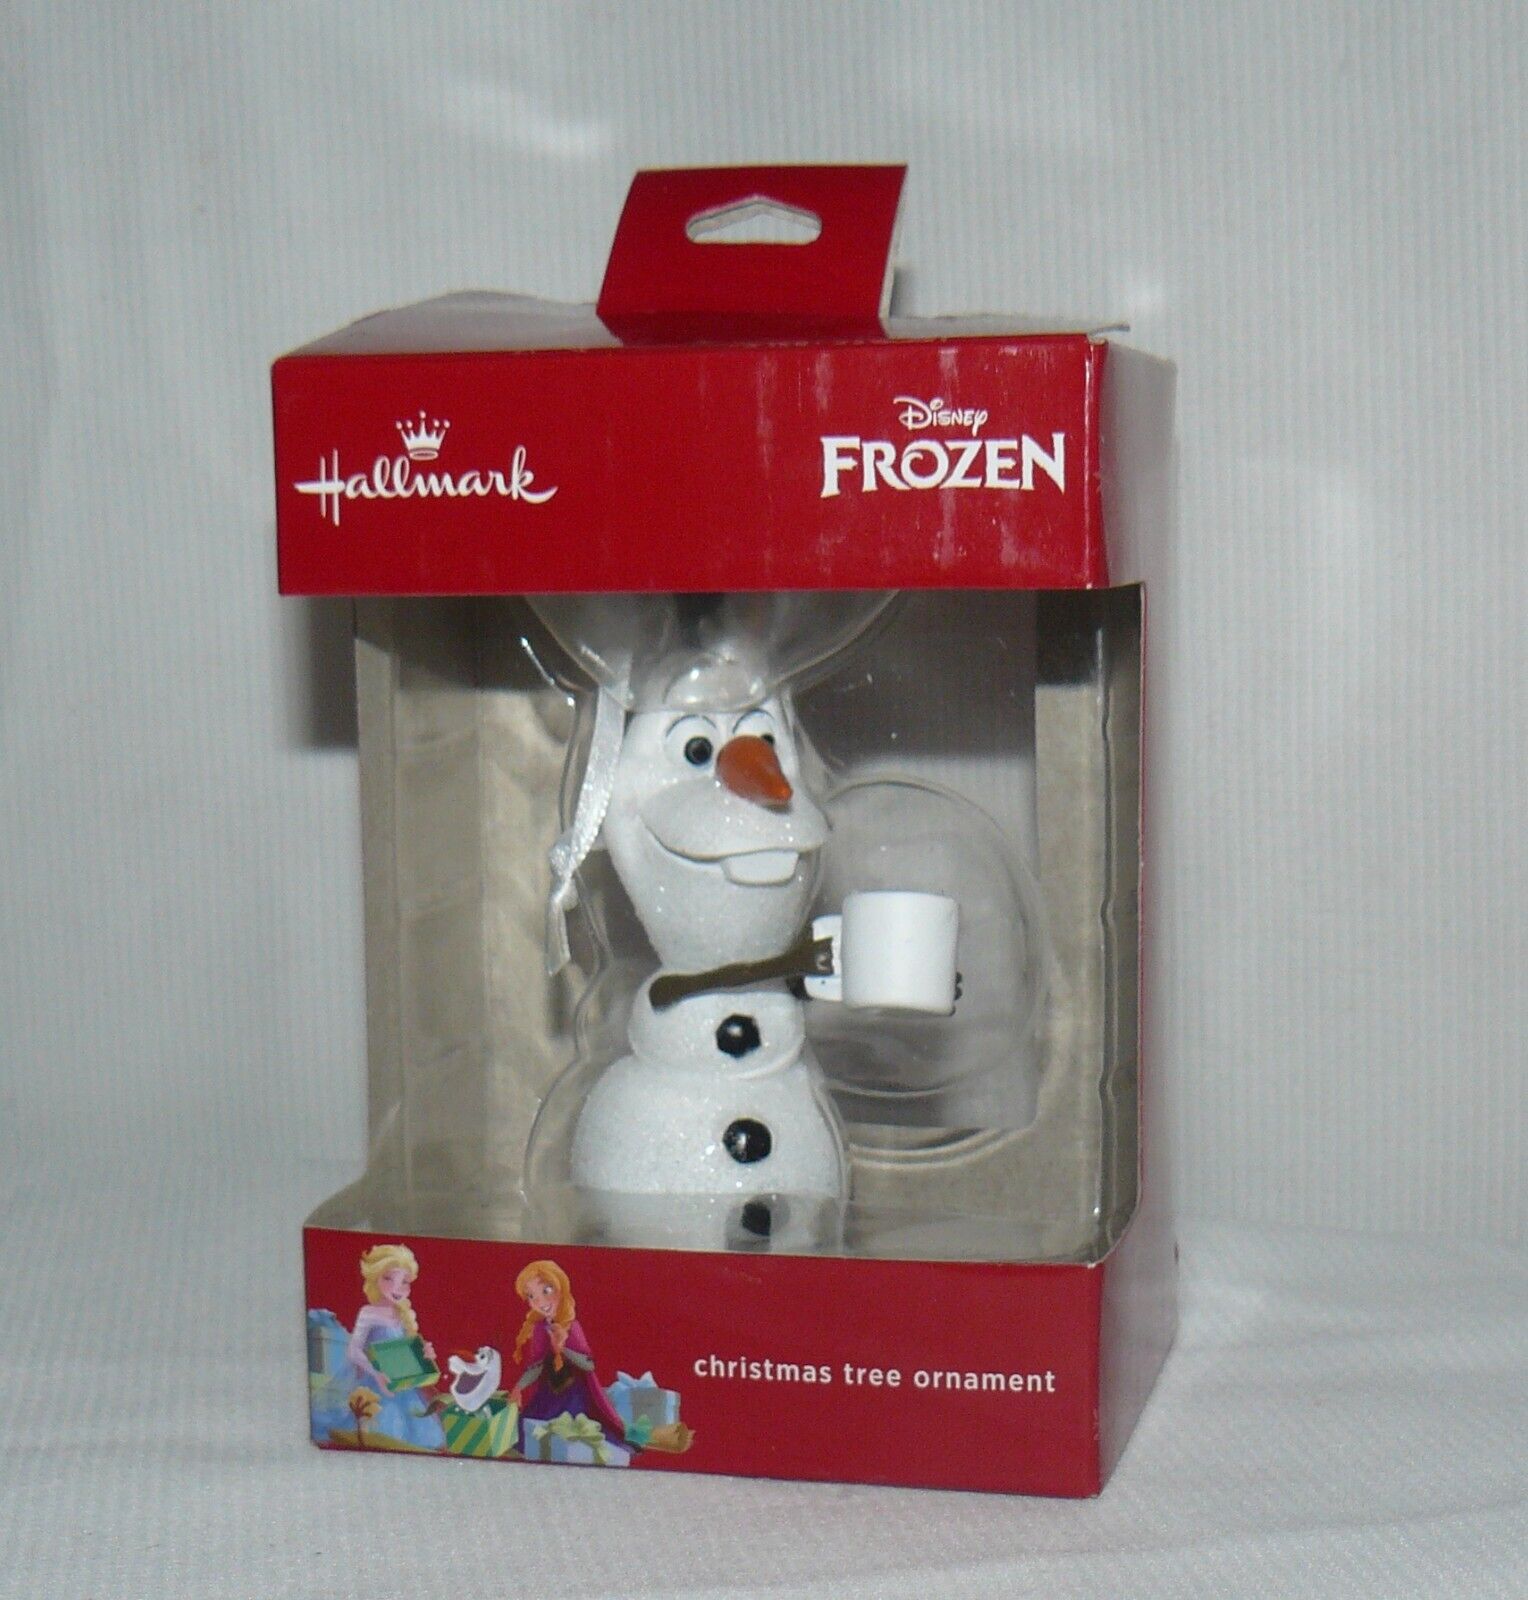 Disney Frozen Olaf Hallmark Ornament Damaged Box